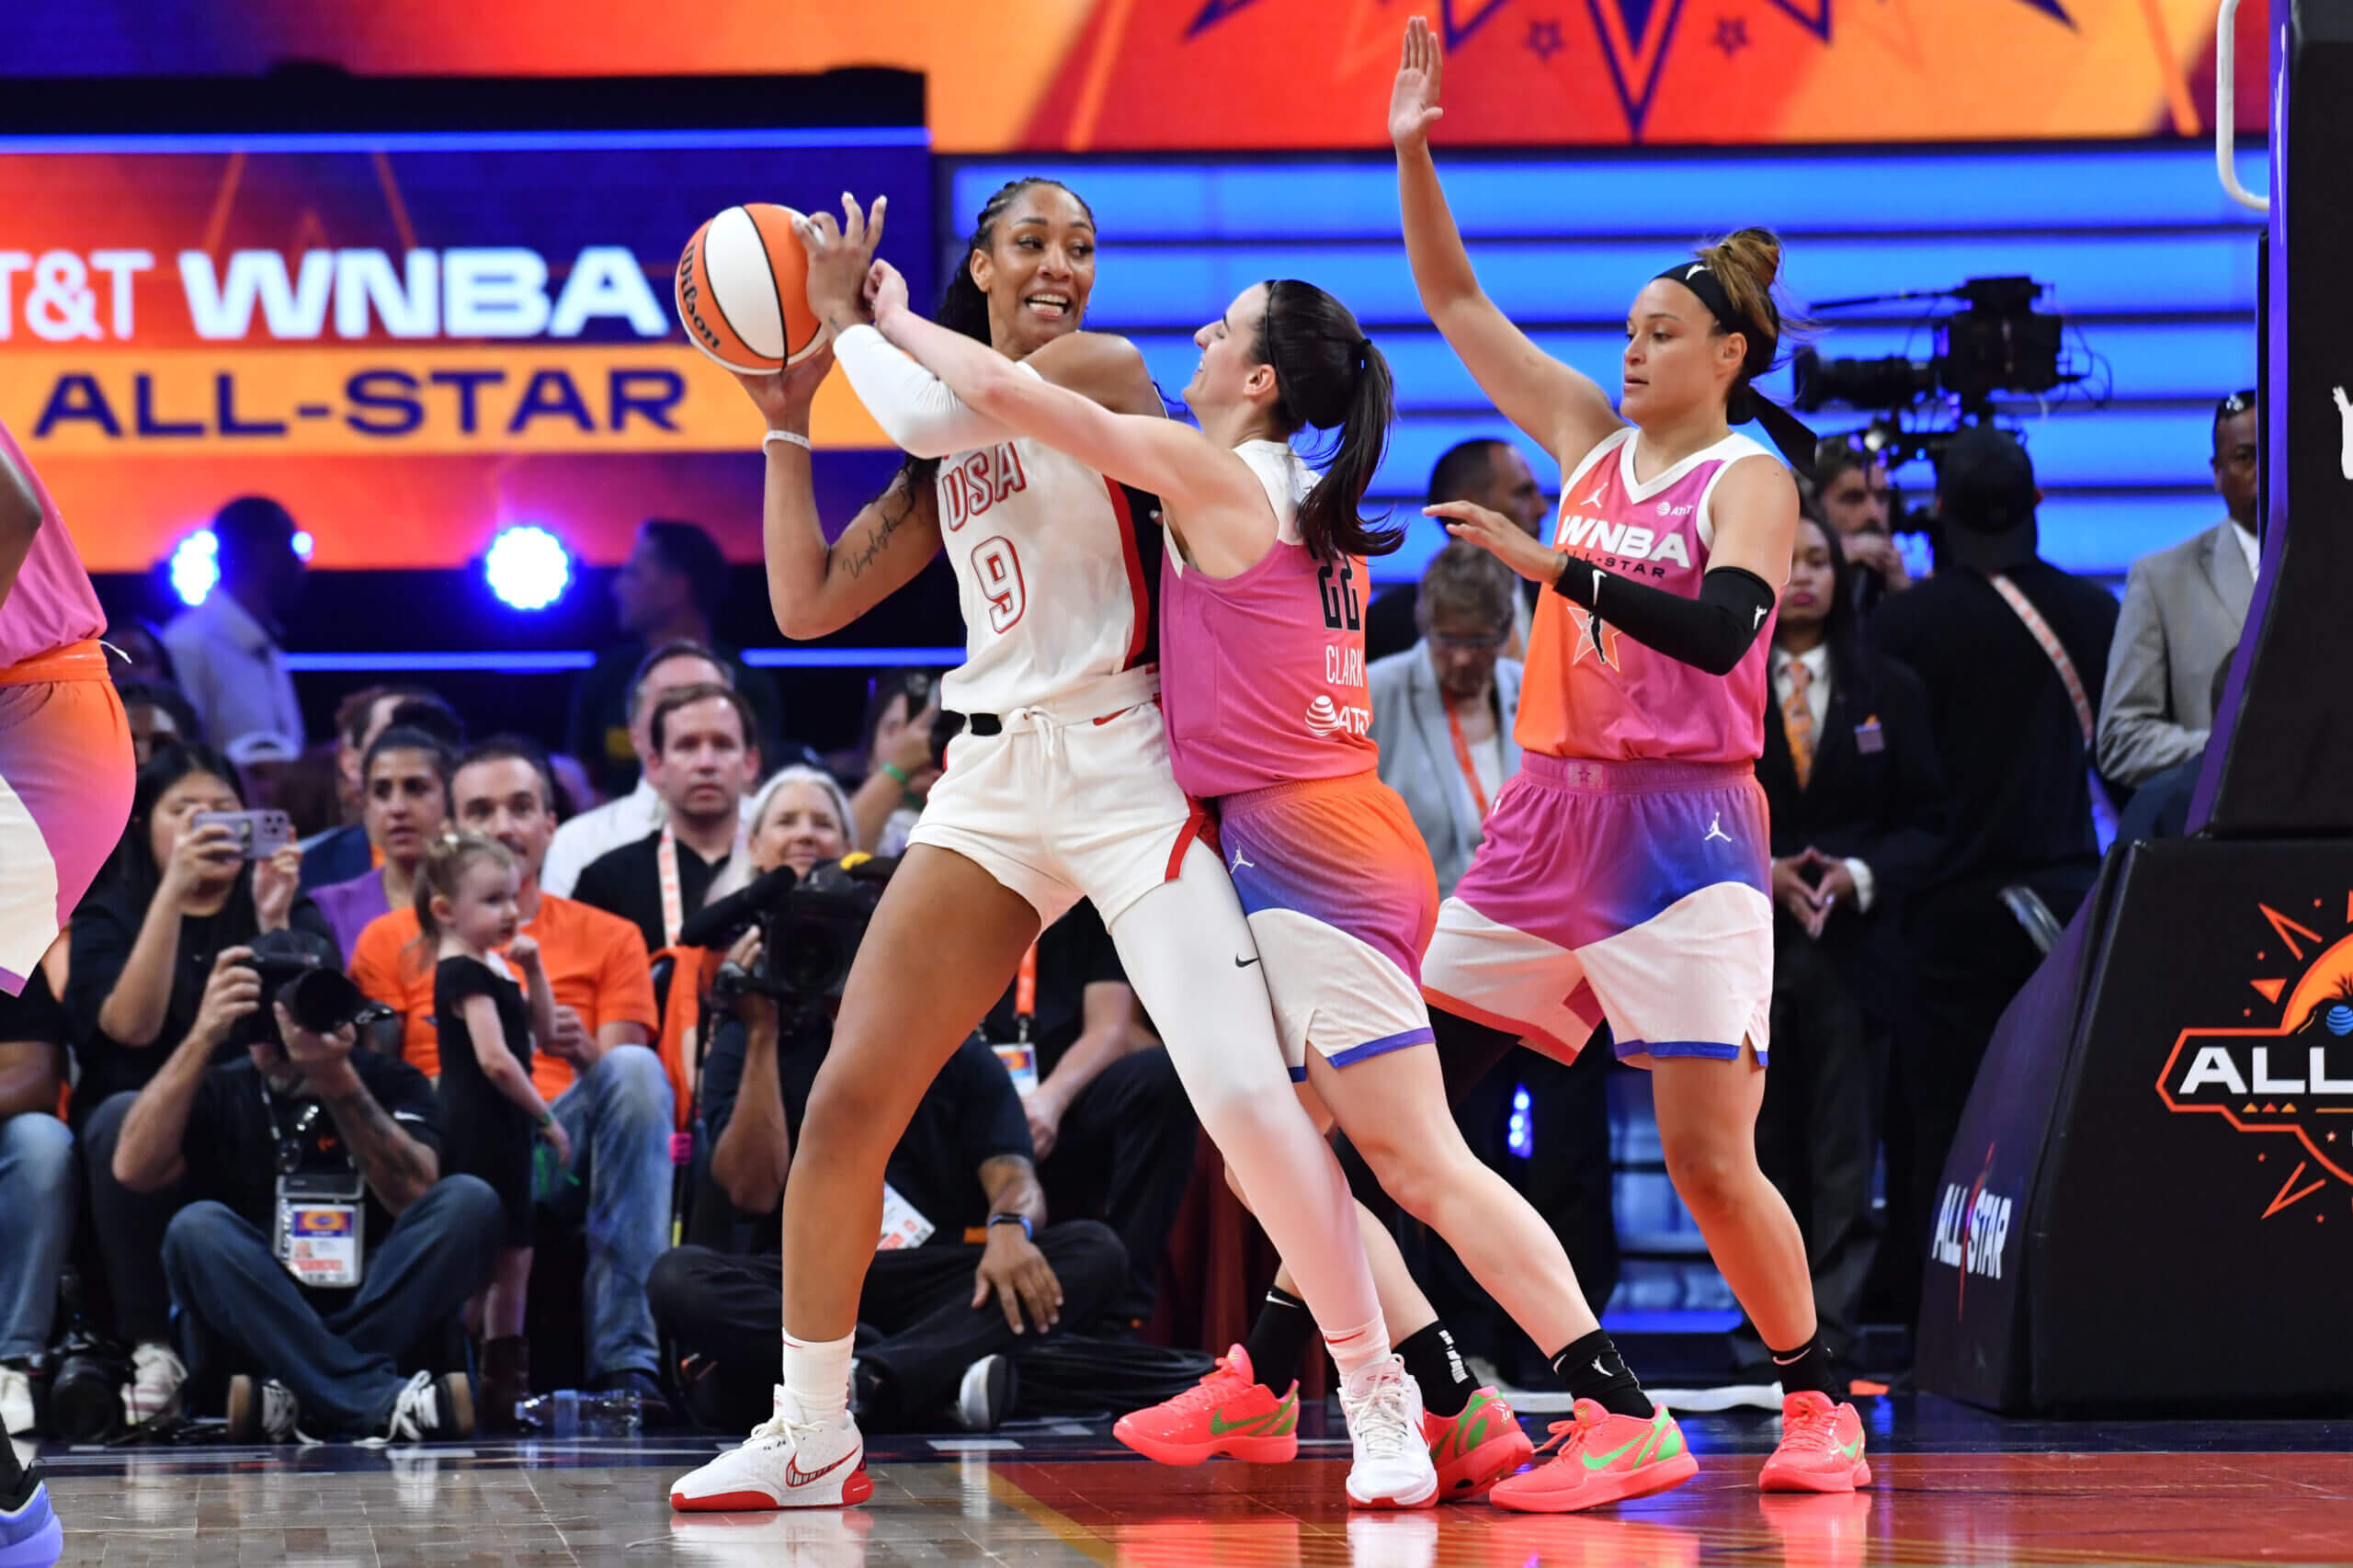 WNBA All-Star Game grades: How did Angel Reese, Diana Taurasi, Caitlin Clark perform?